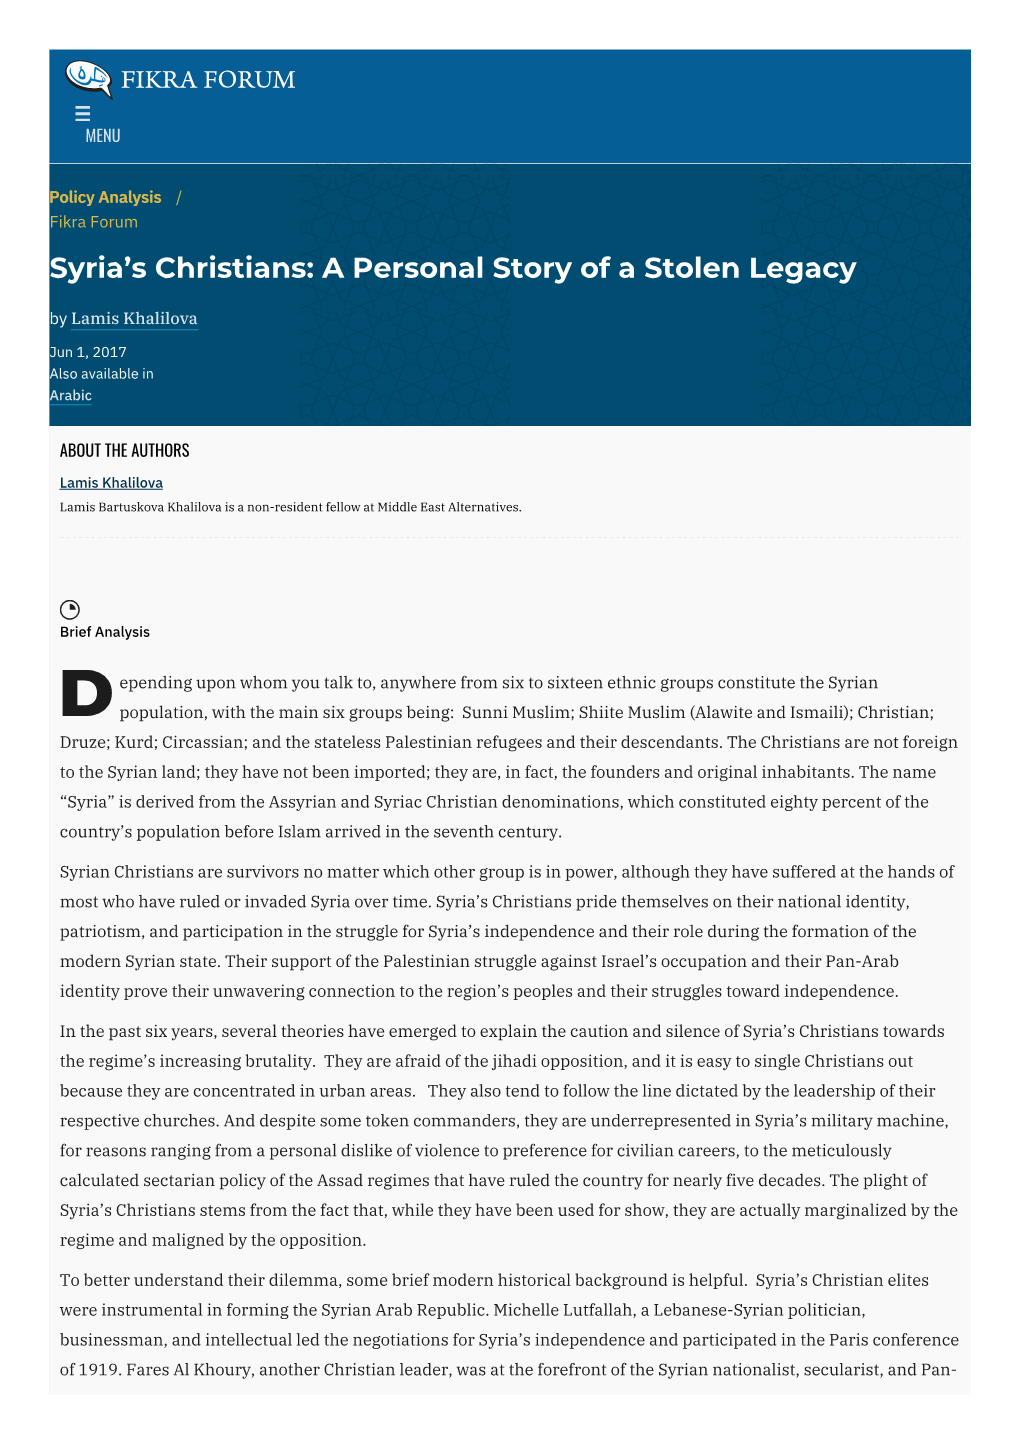 Syria's Christians